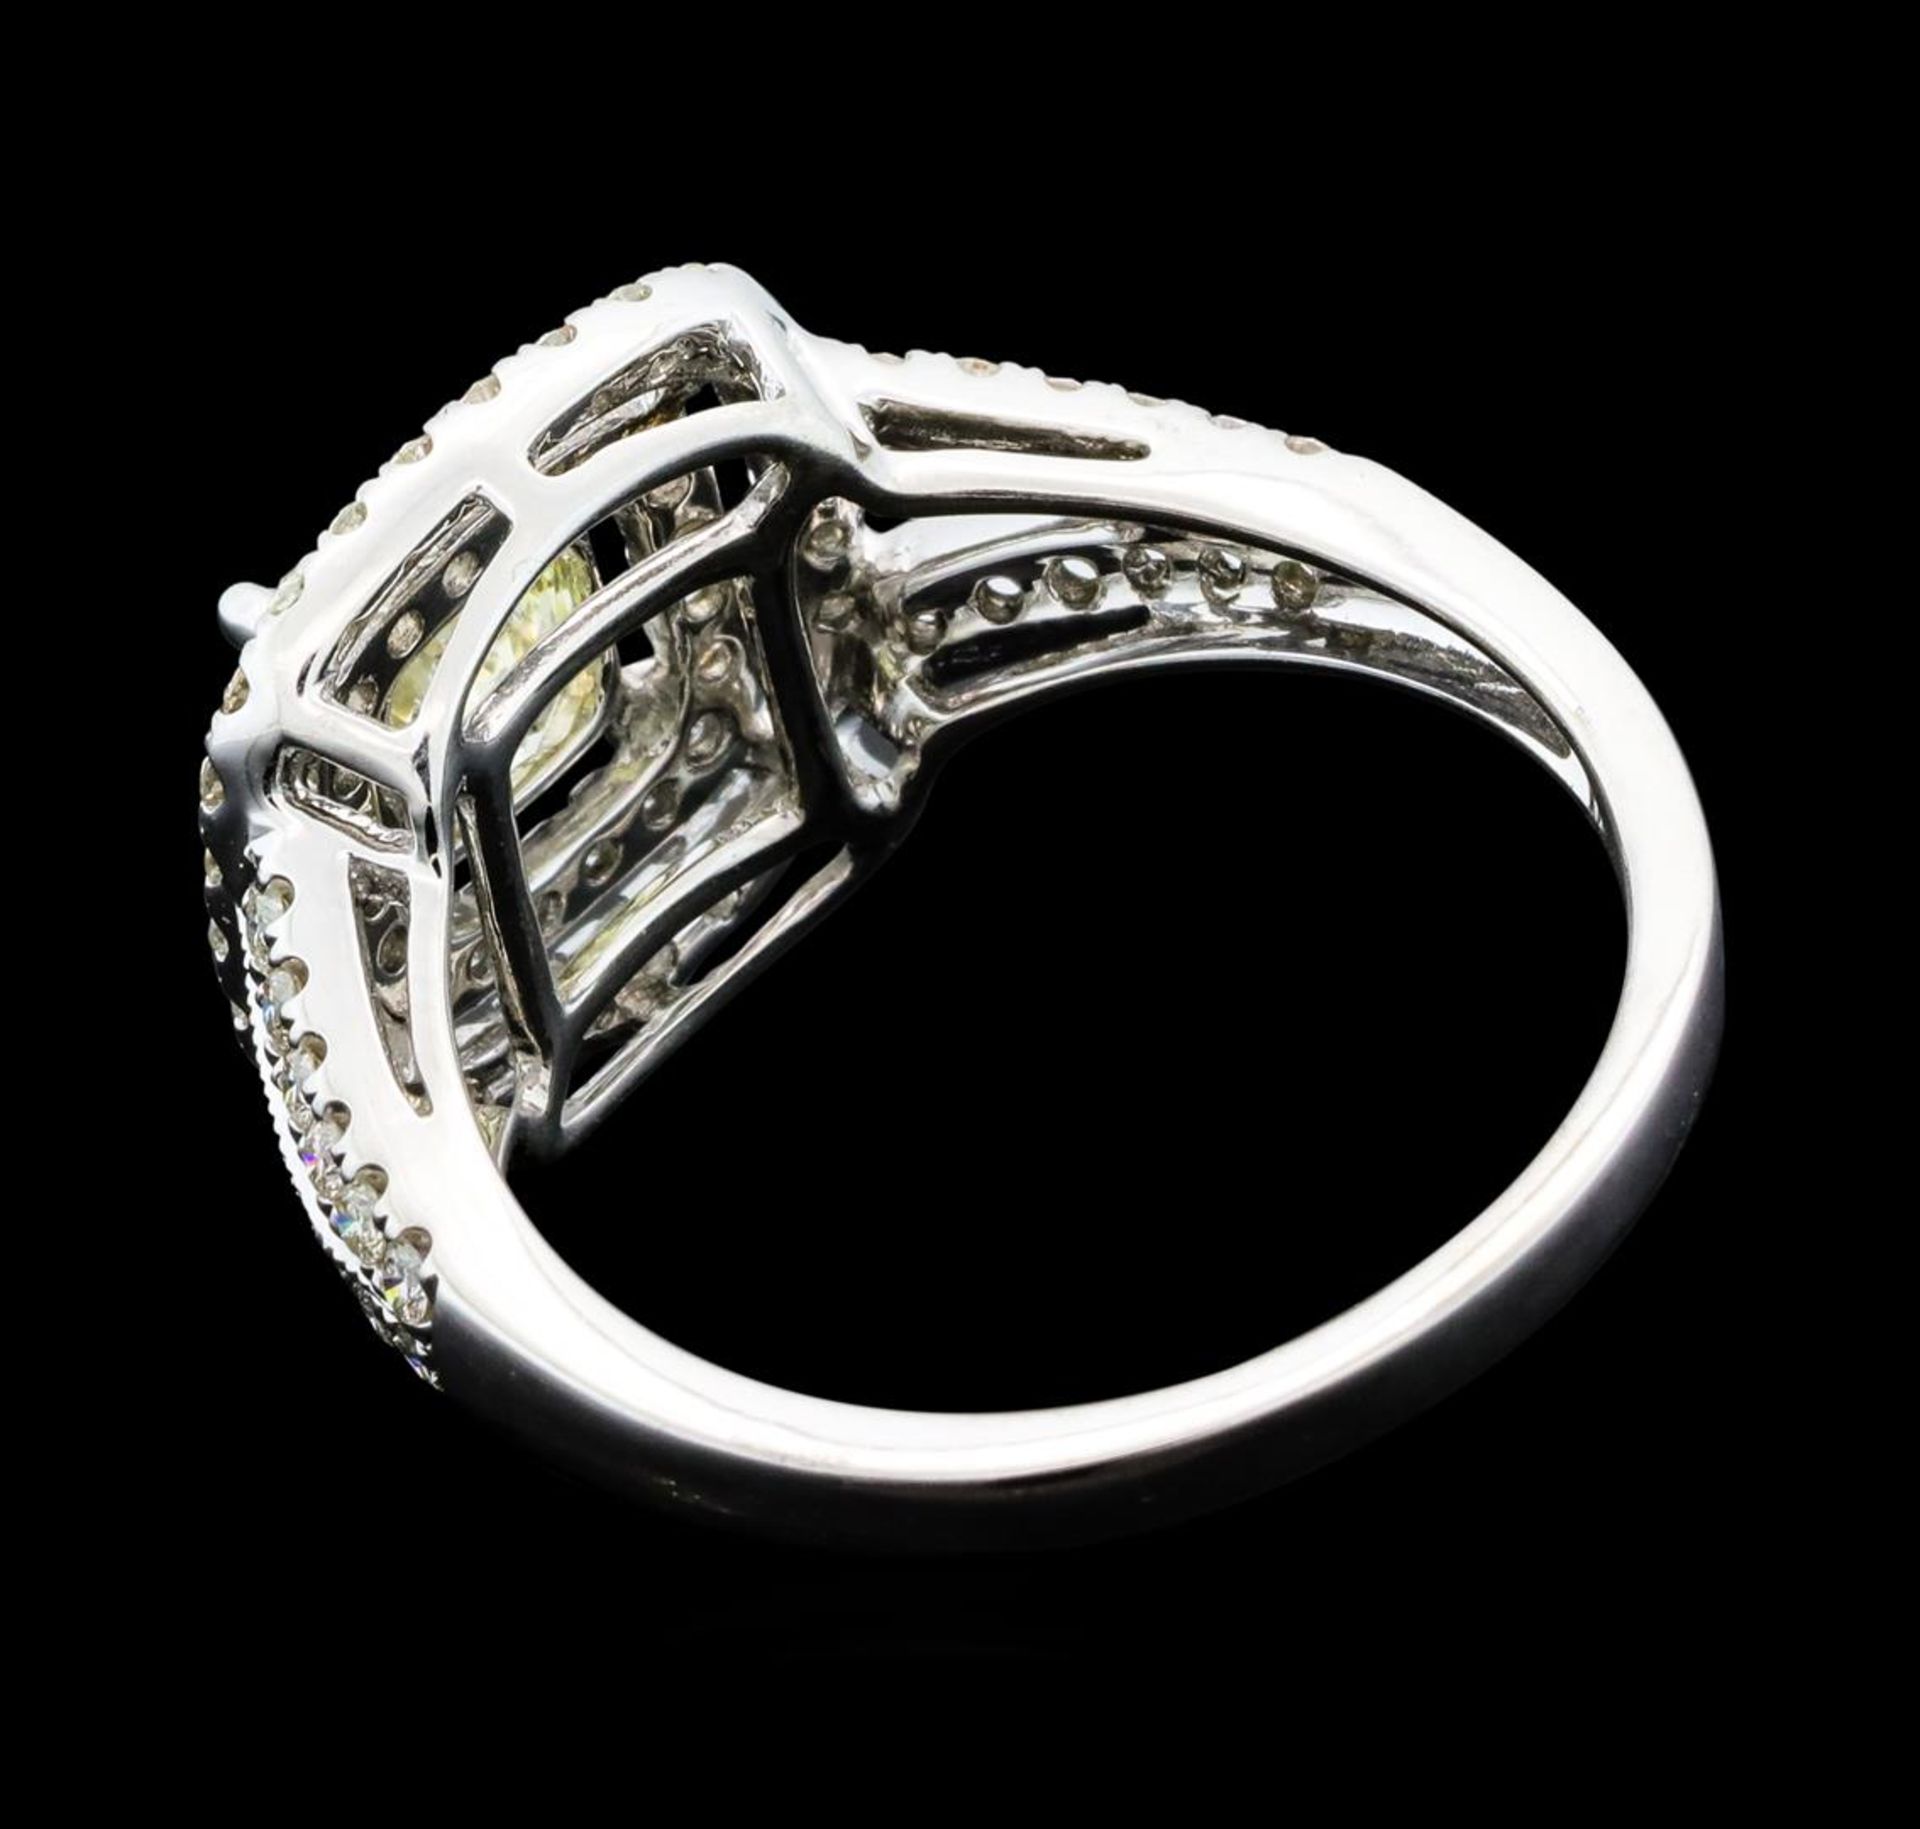 1.59 ctw Diamond Ring - 14KT White Gold - Image 3 of 5